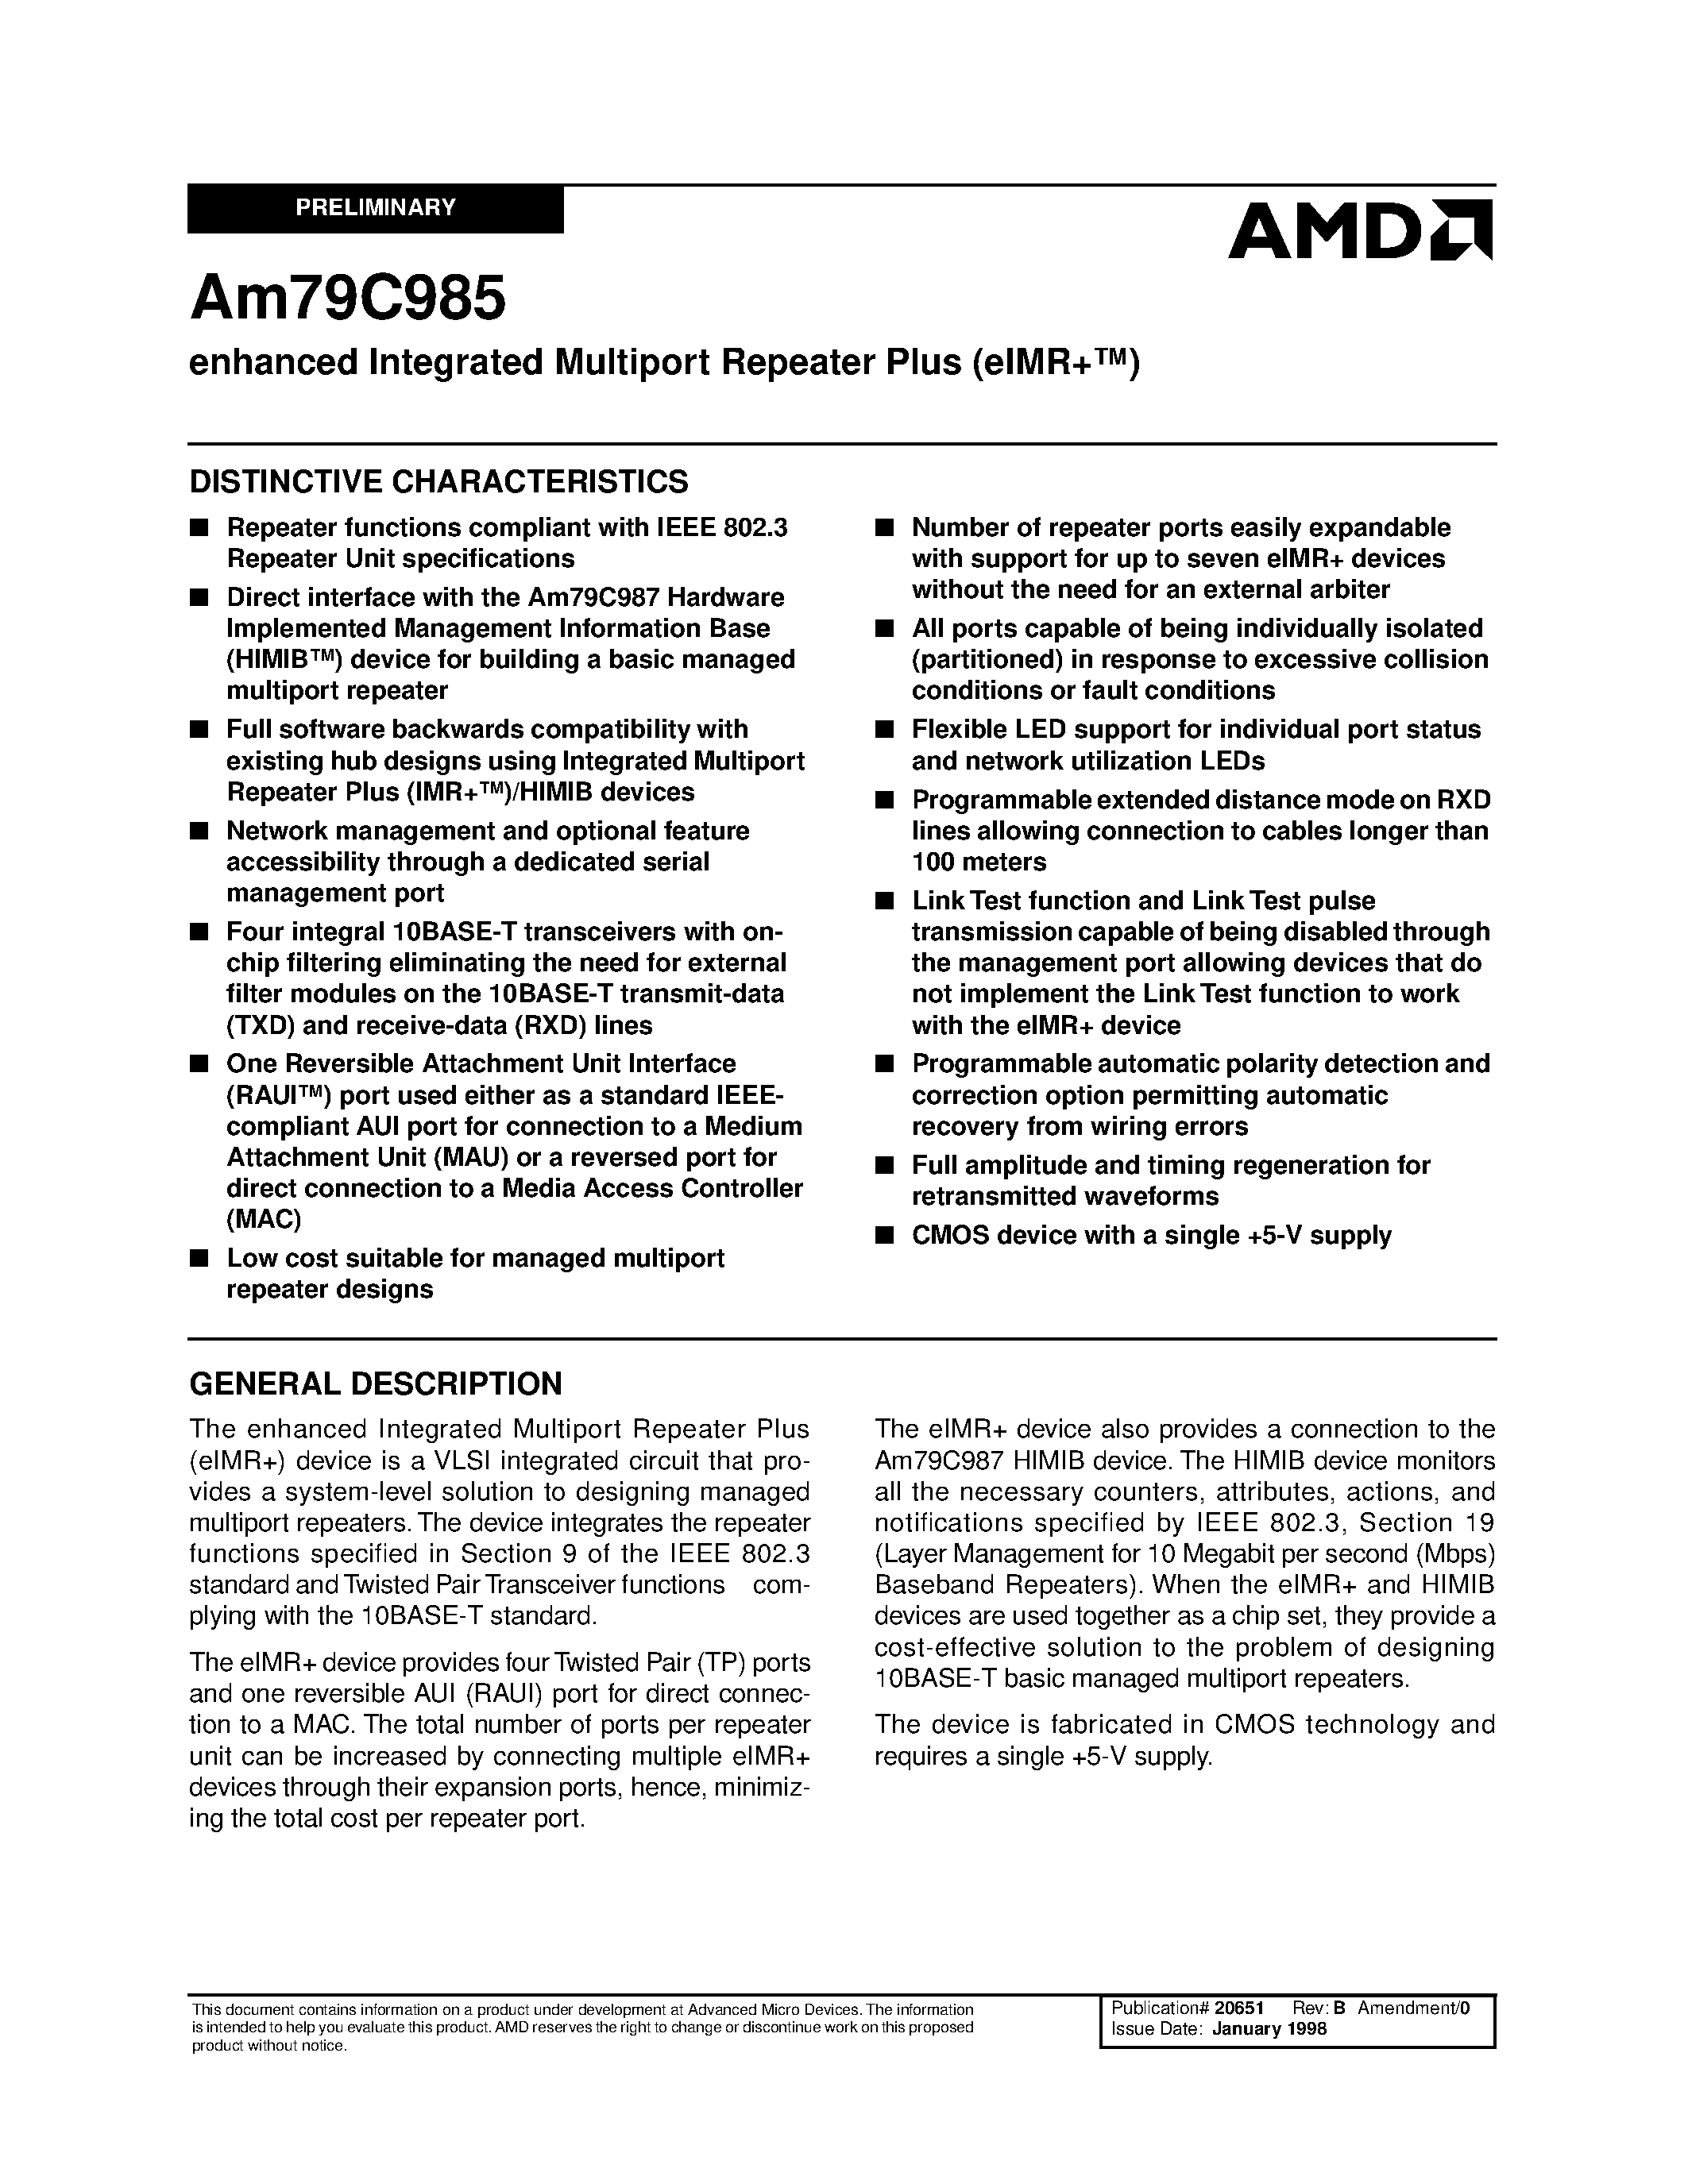 Даташит AM79C985 - enhanced Integrated Multiport Repeater Plus (eIMR+) страница 1